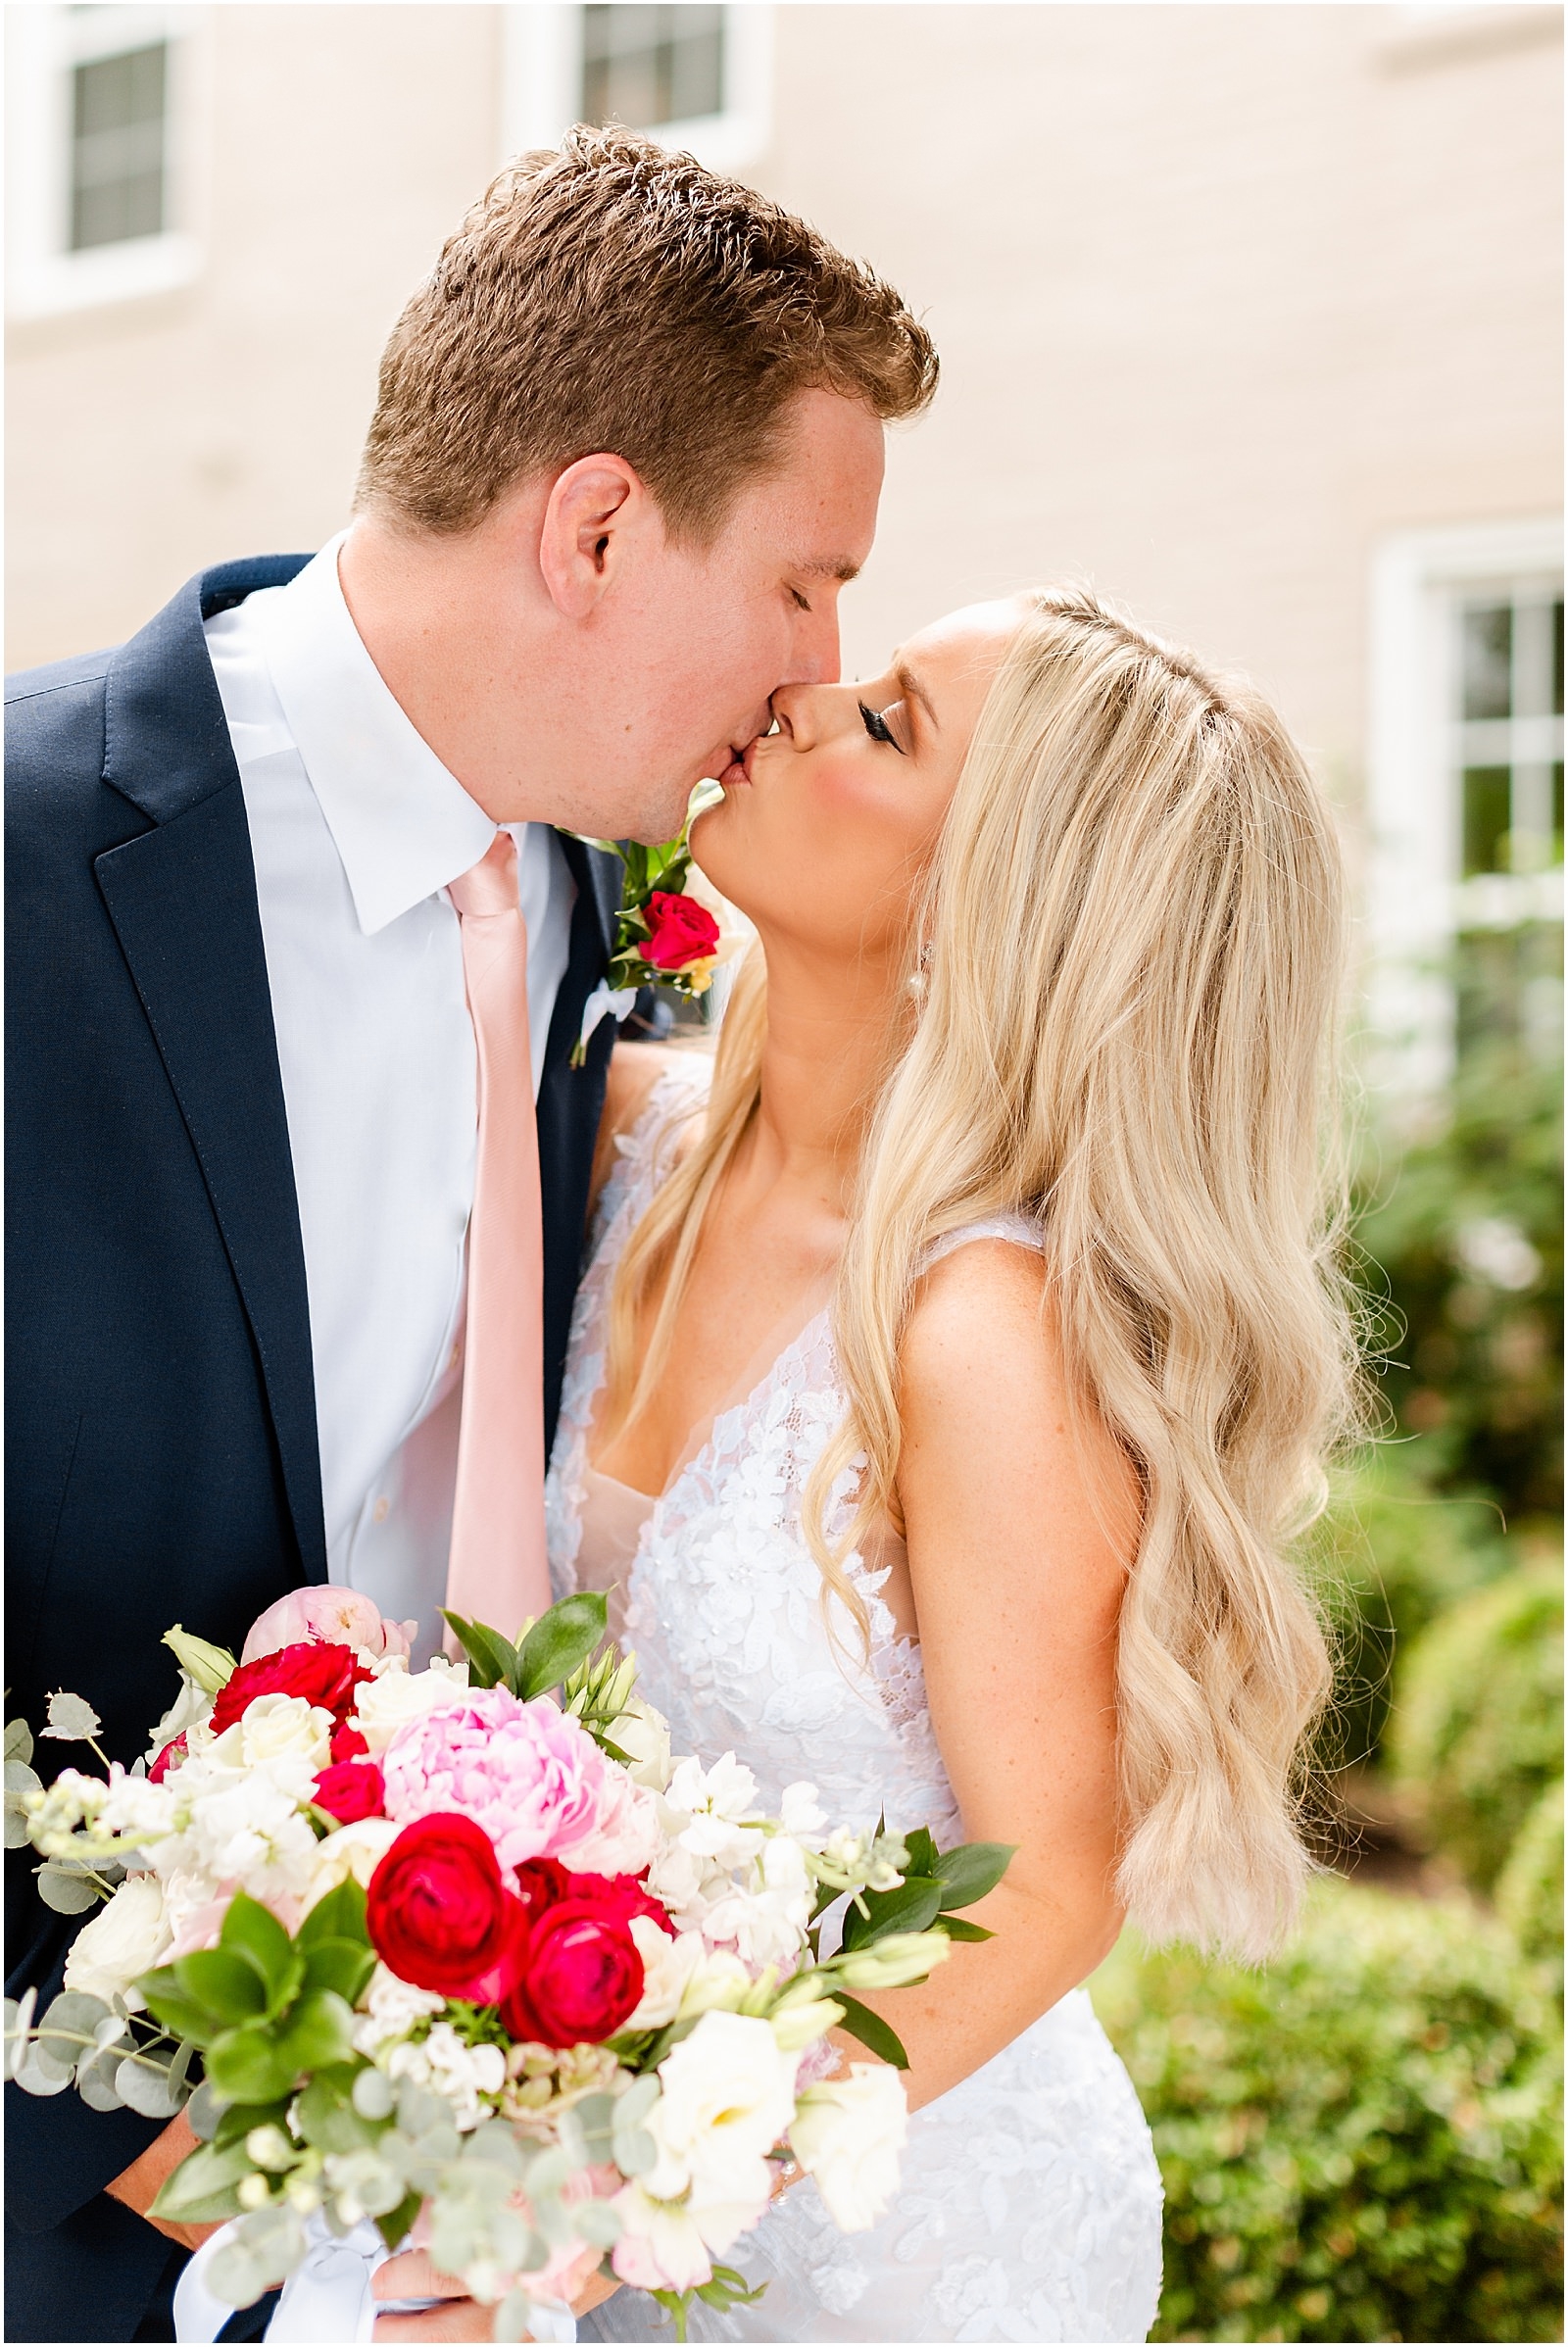 An Evansville Country Club Wedding | Madison and Christiaan | Bret and Brandie | Evansville Photographers | @bretandbrandie-0097.jpg